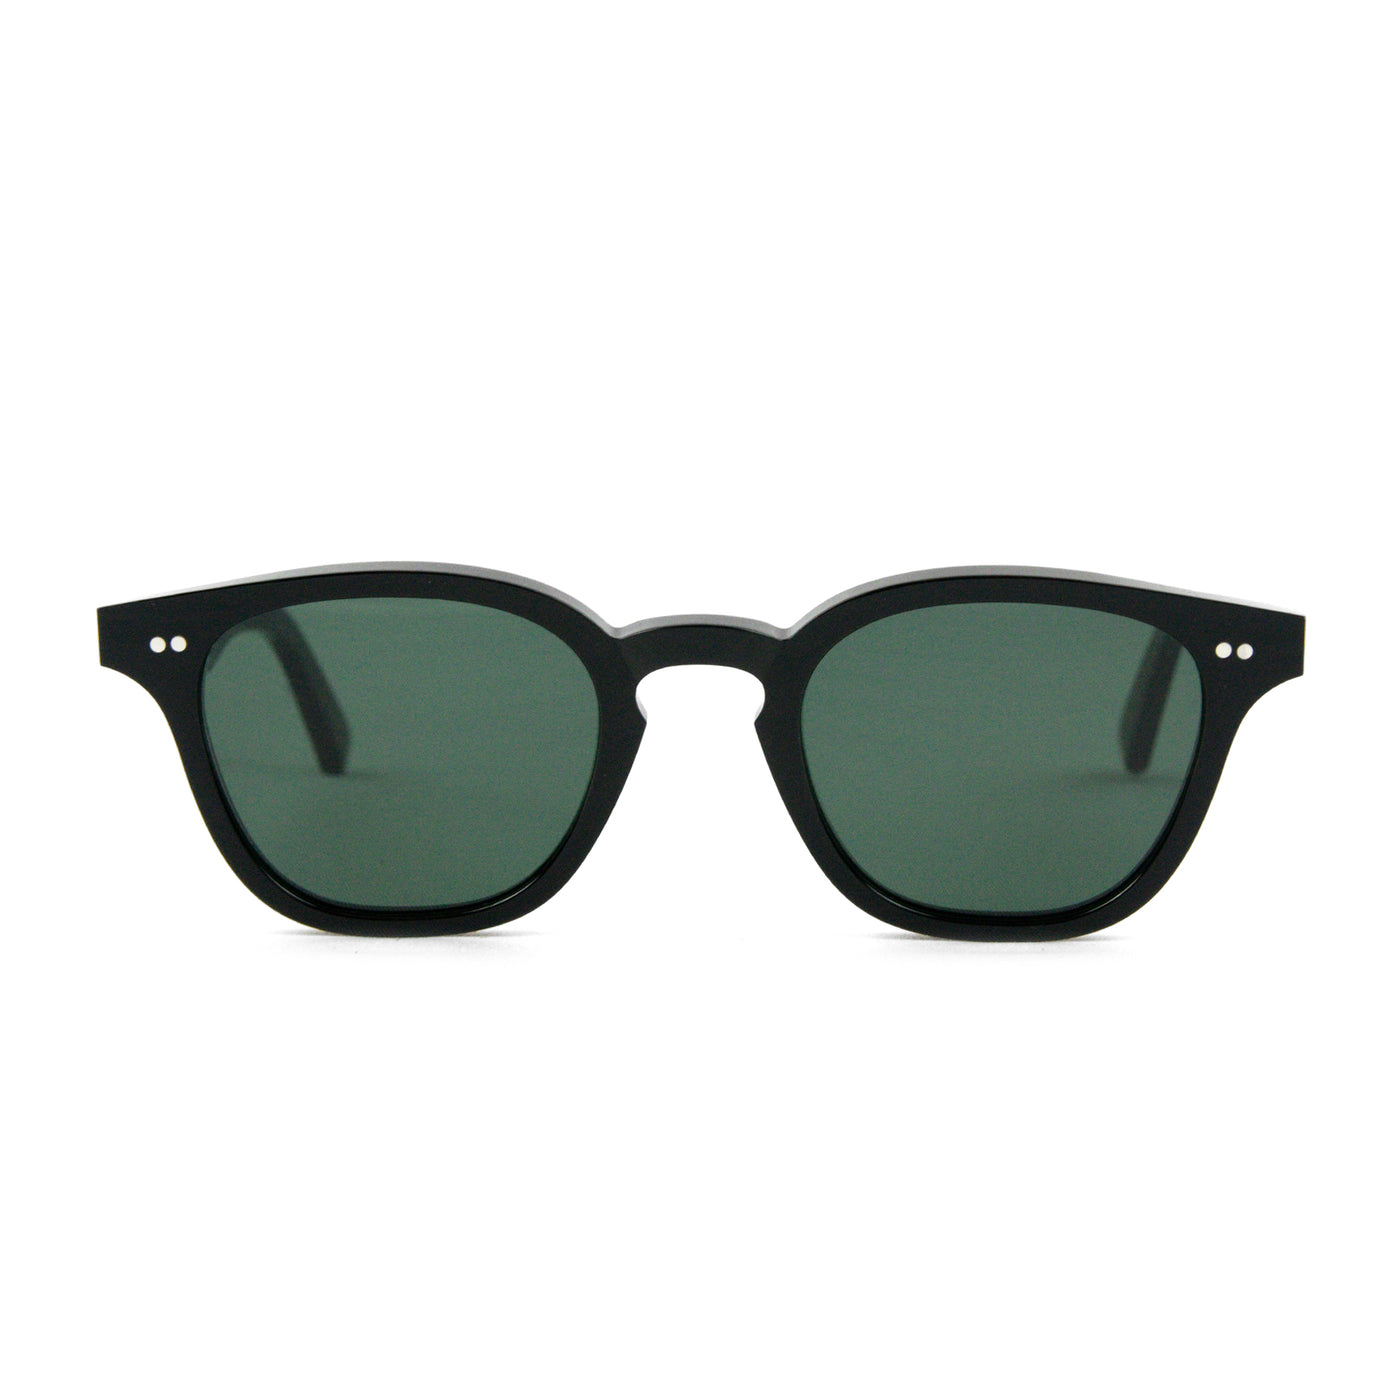 Monokel River Black Sunglasses Green Solid Lens FRONT 